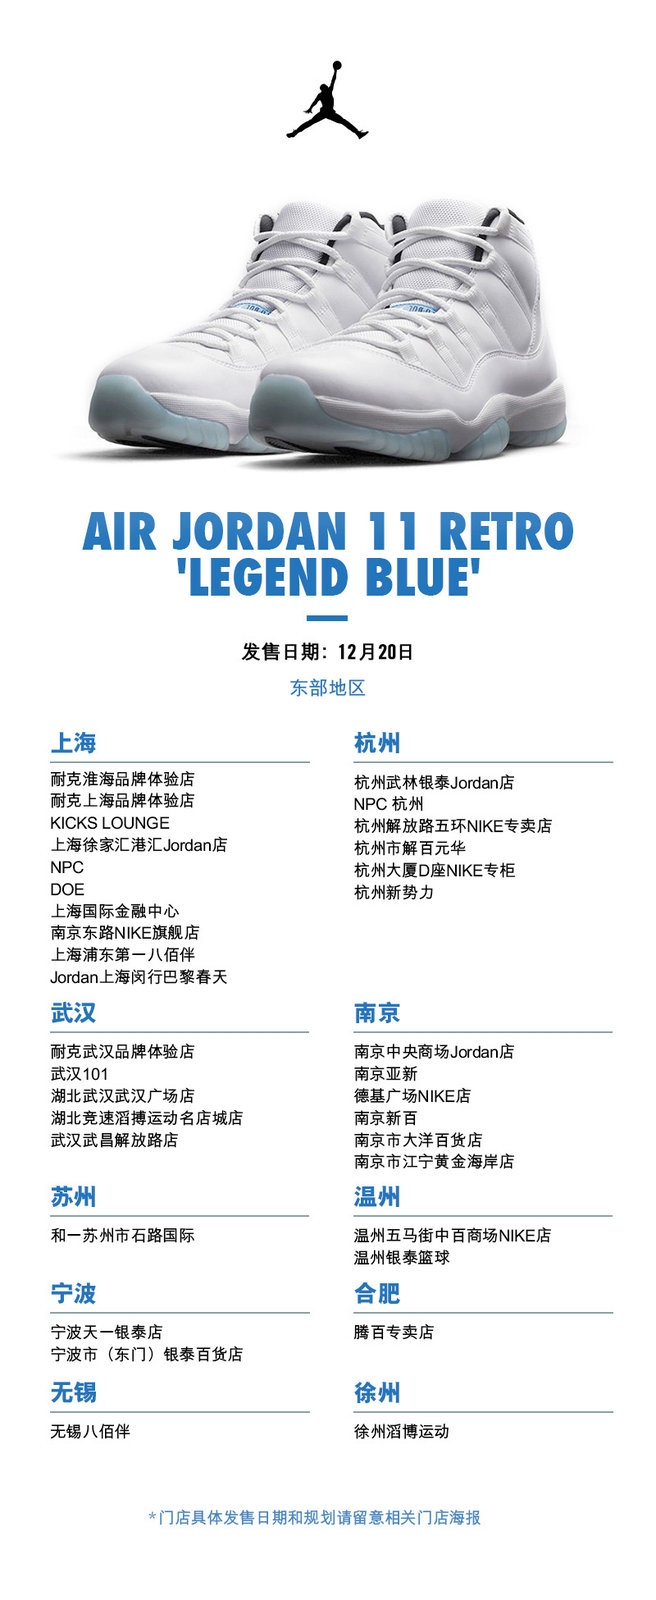 378037-117,AJ11,Air Jordan 11 378037-117AJ11传奇蓝 Air Jordan 11 ＂Legend Blue＂ 线下门店发售信息